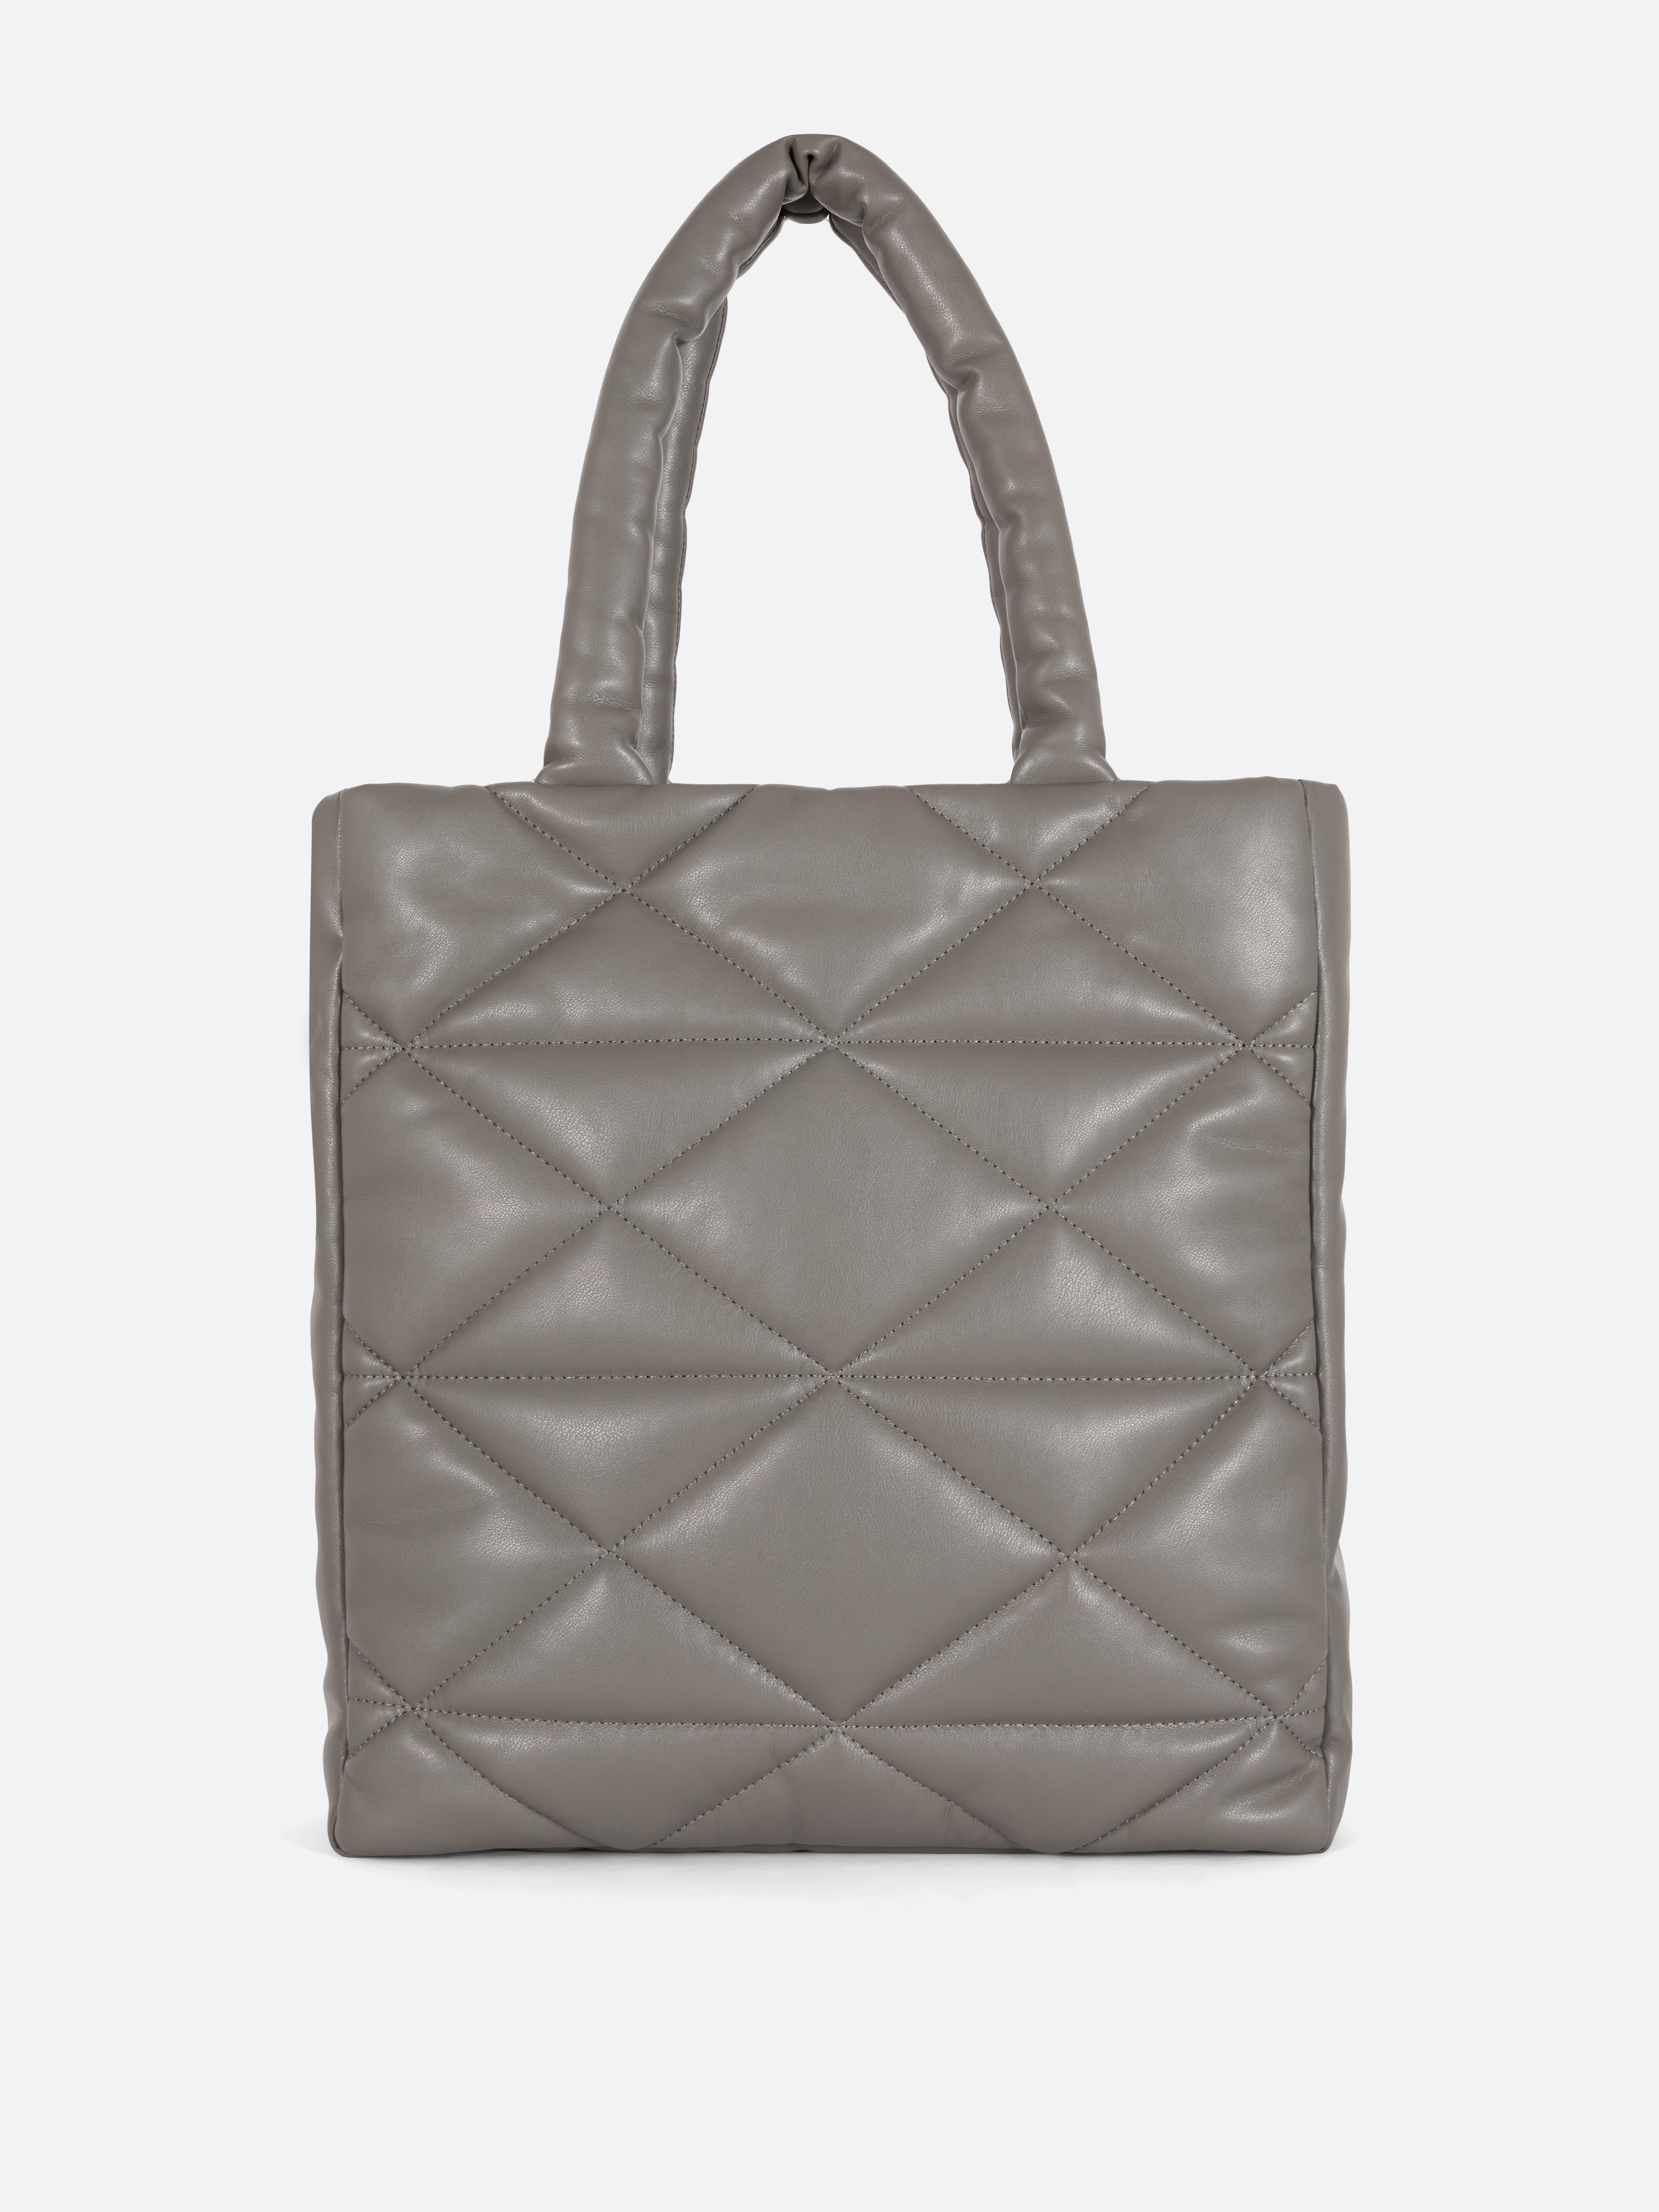 Rita Ora Quilted Shopper Bag